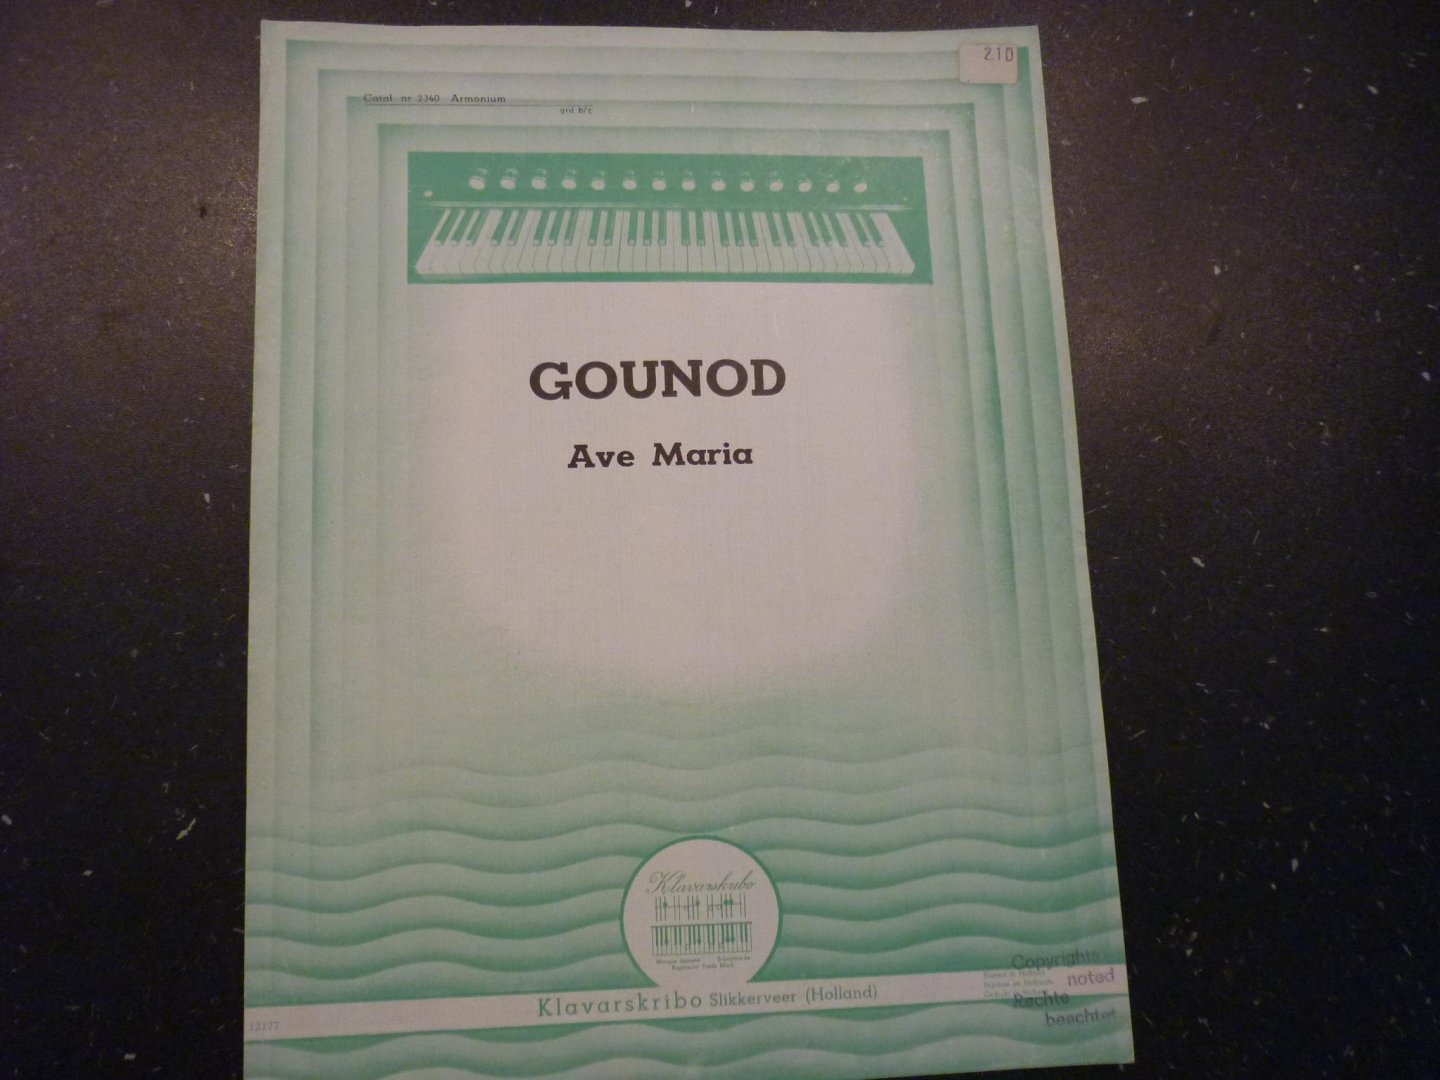 Gounod - Ave maria  /  Klavarskribo